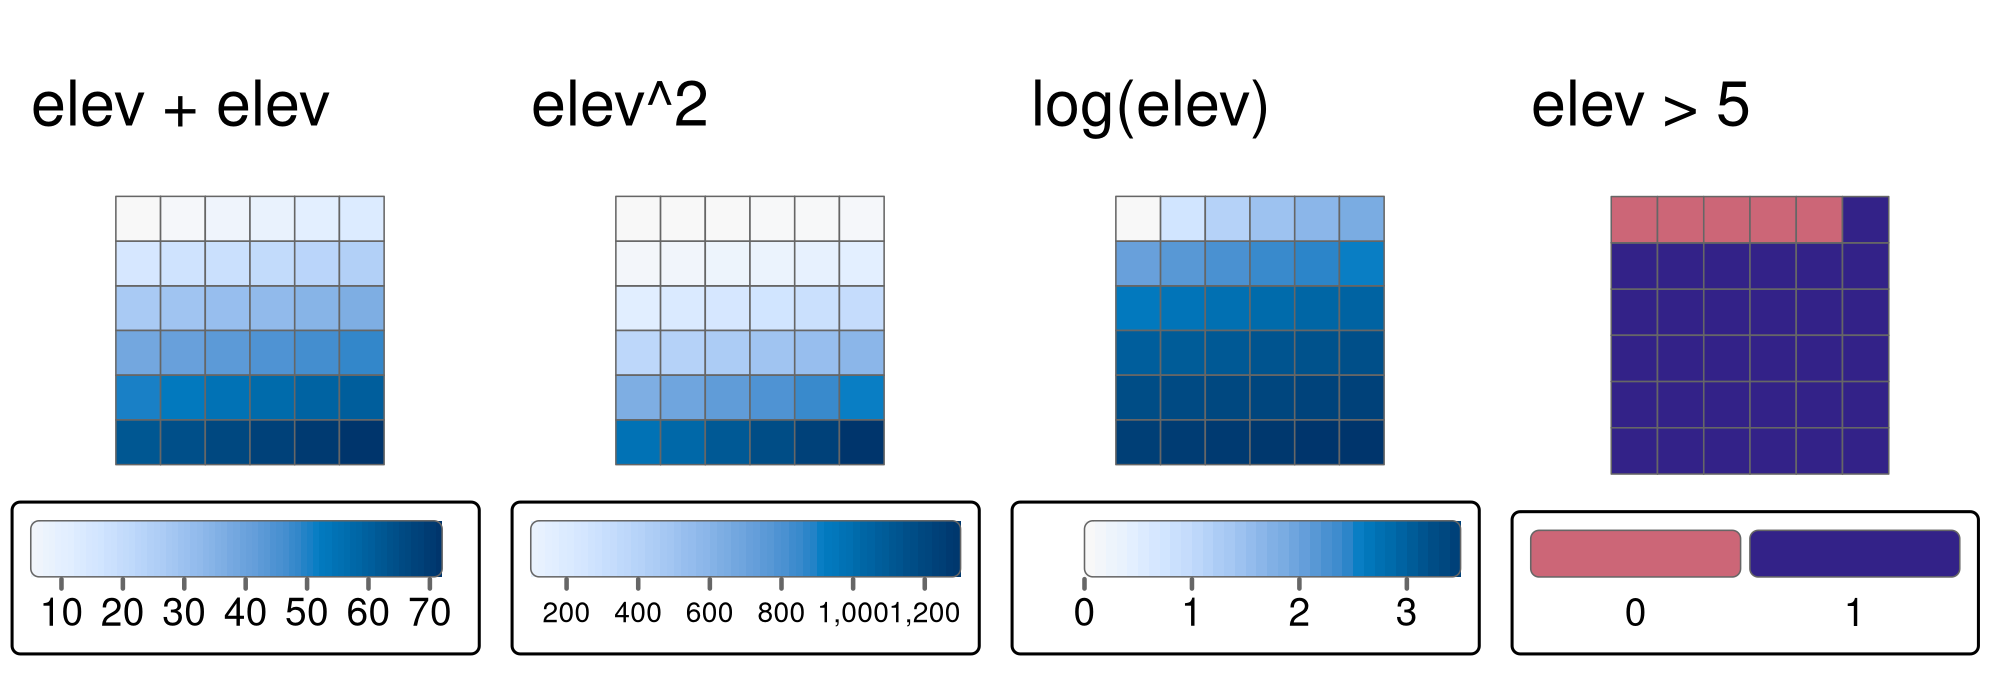 elev ラスタオブジェクトのさまざまなローカル操作の例: 2つのラスタの加算、二乗、対数変換の適用、論理演算の実行。